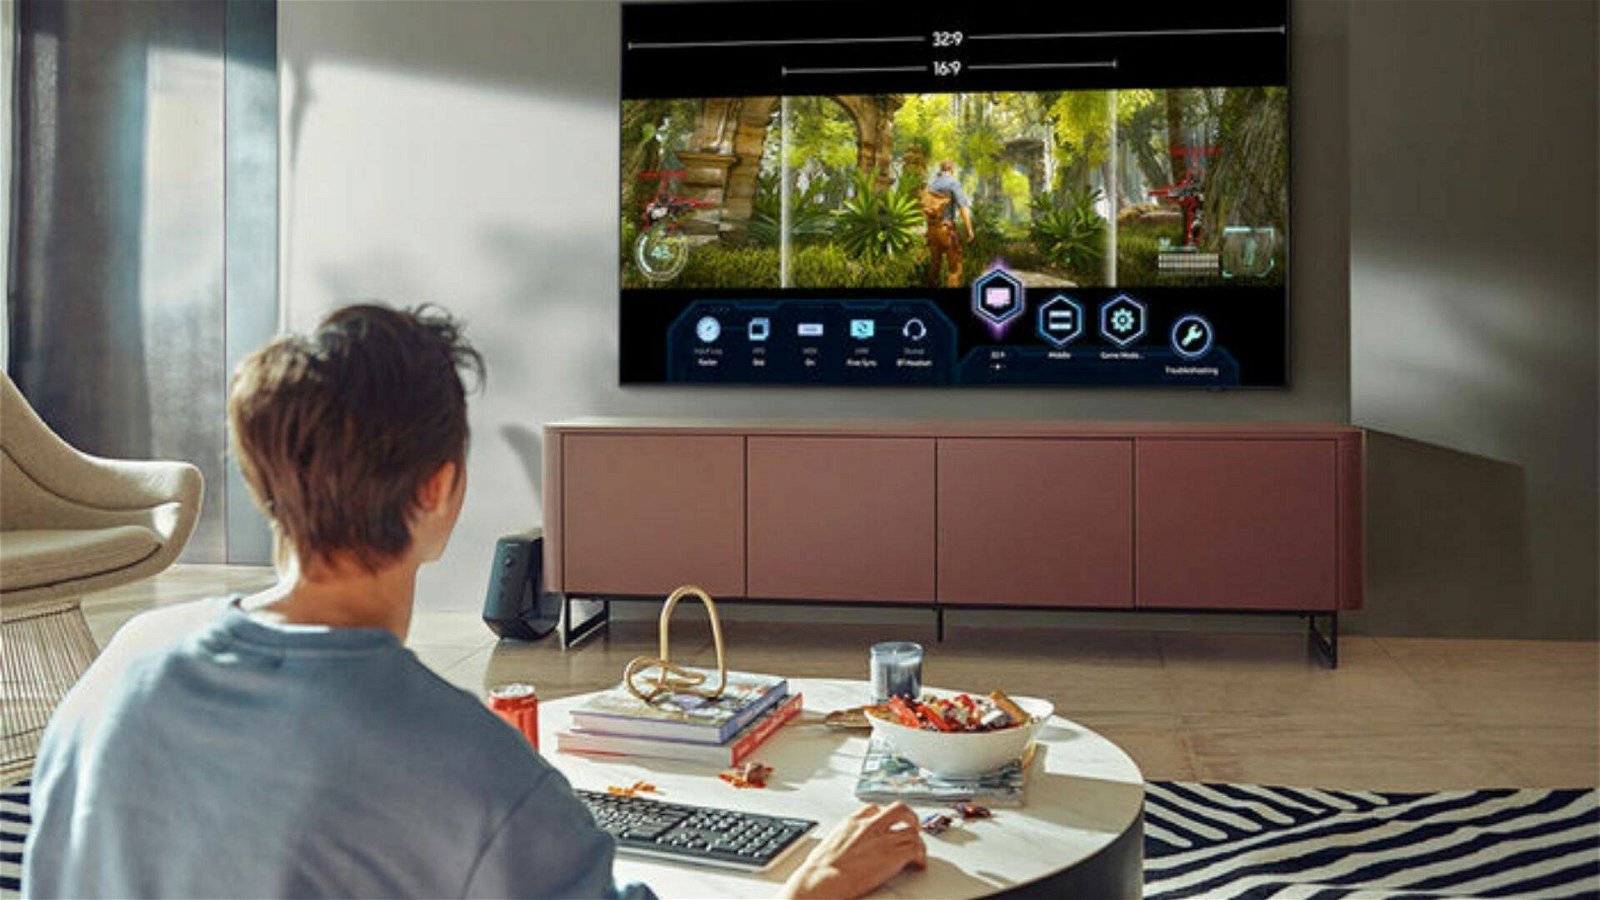 Immagine di Affare Mediaworld! Questa smart TV Samsung top di gamma da 65" è scontata di 800€!